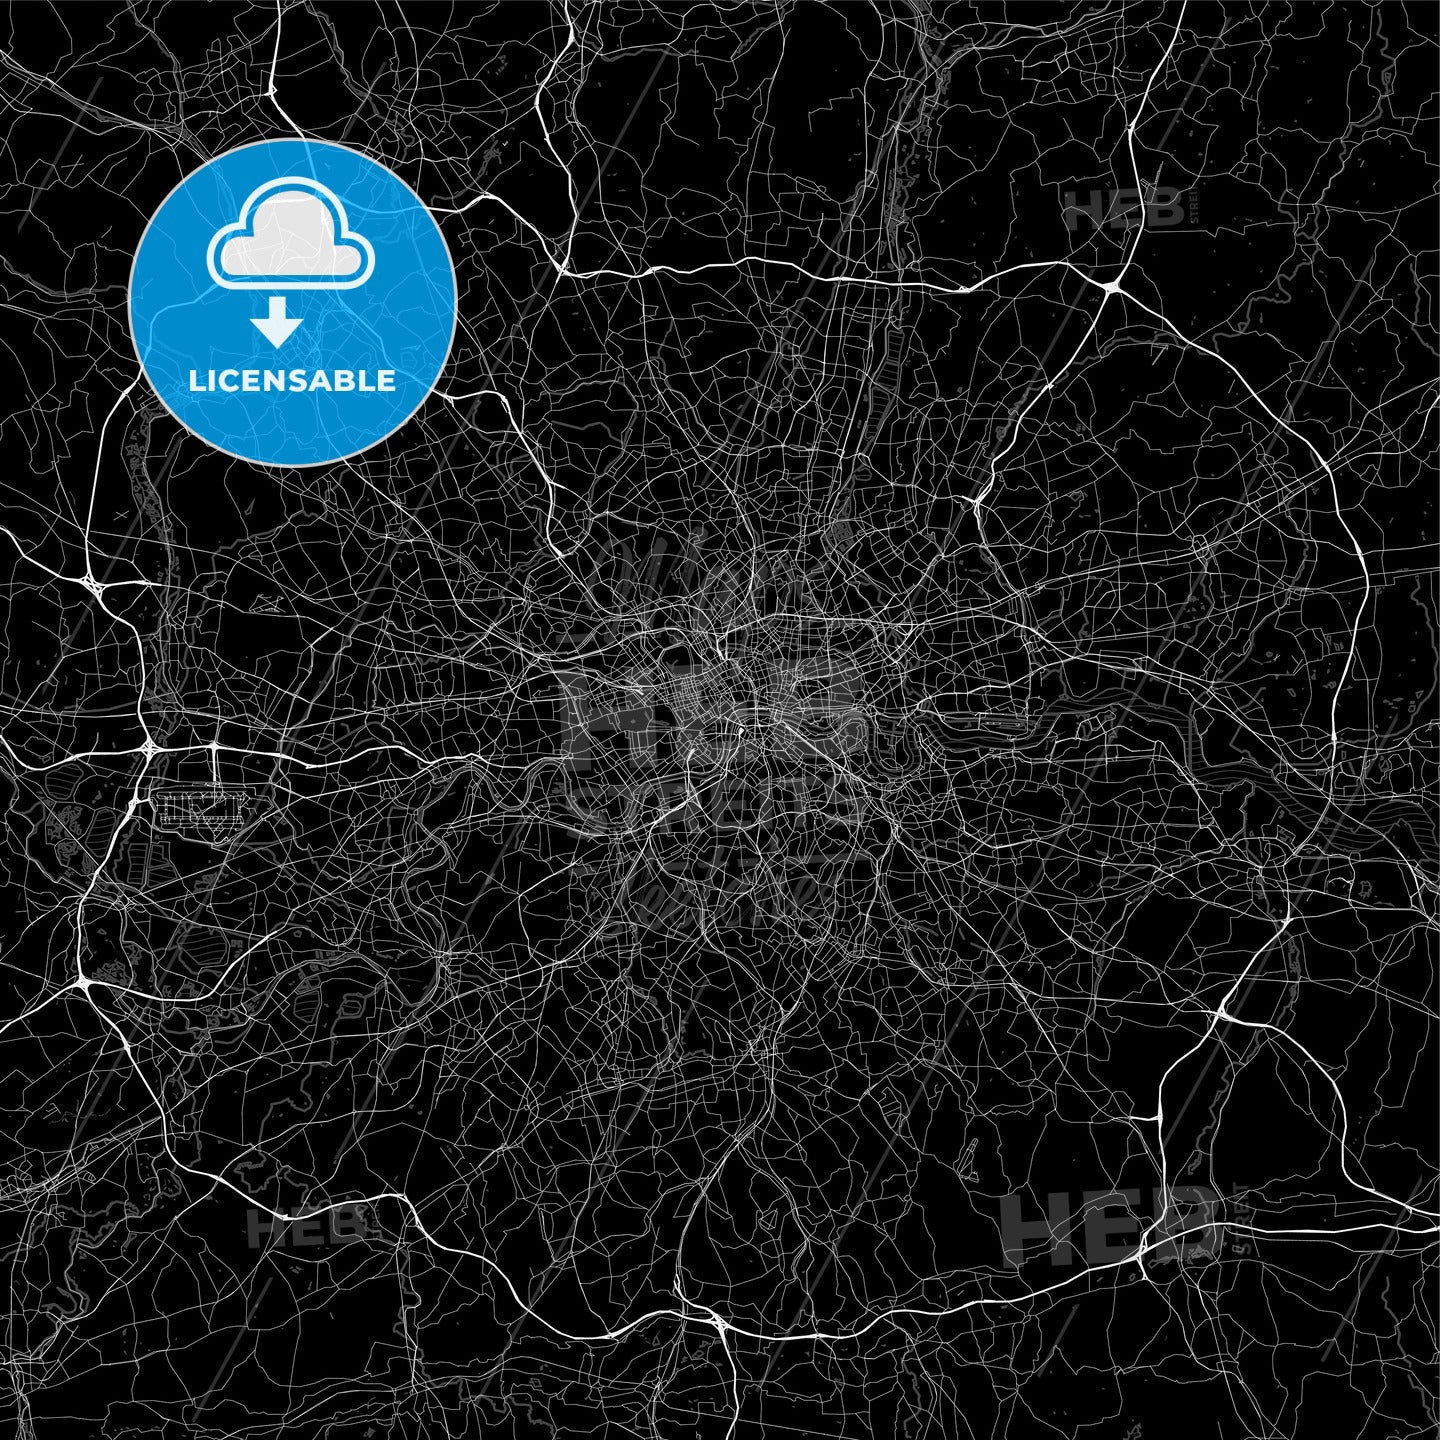 Dark area map of London, United Kingdom